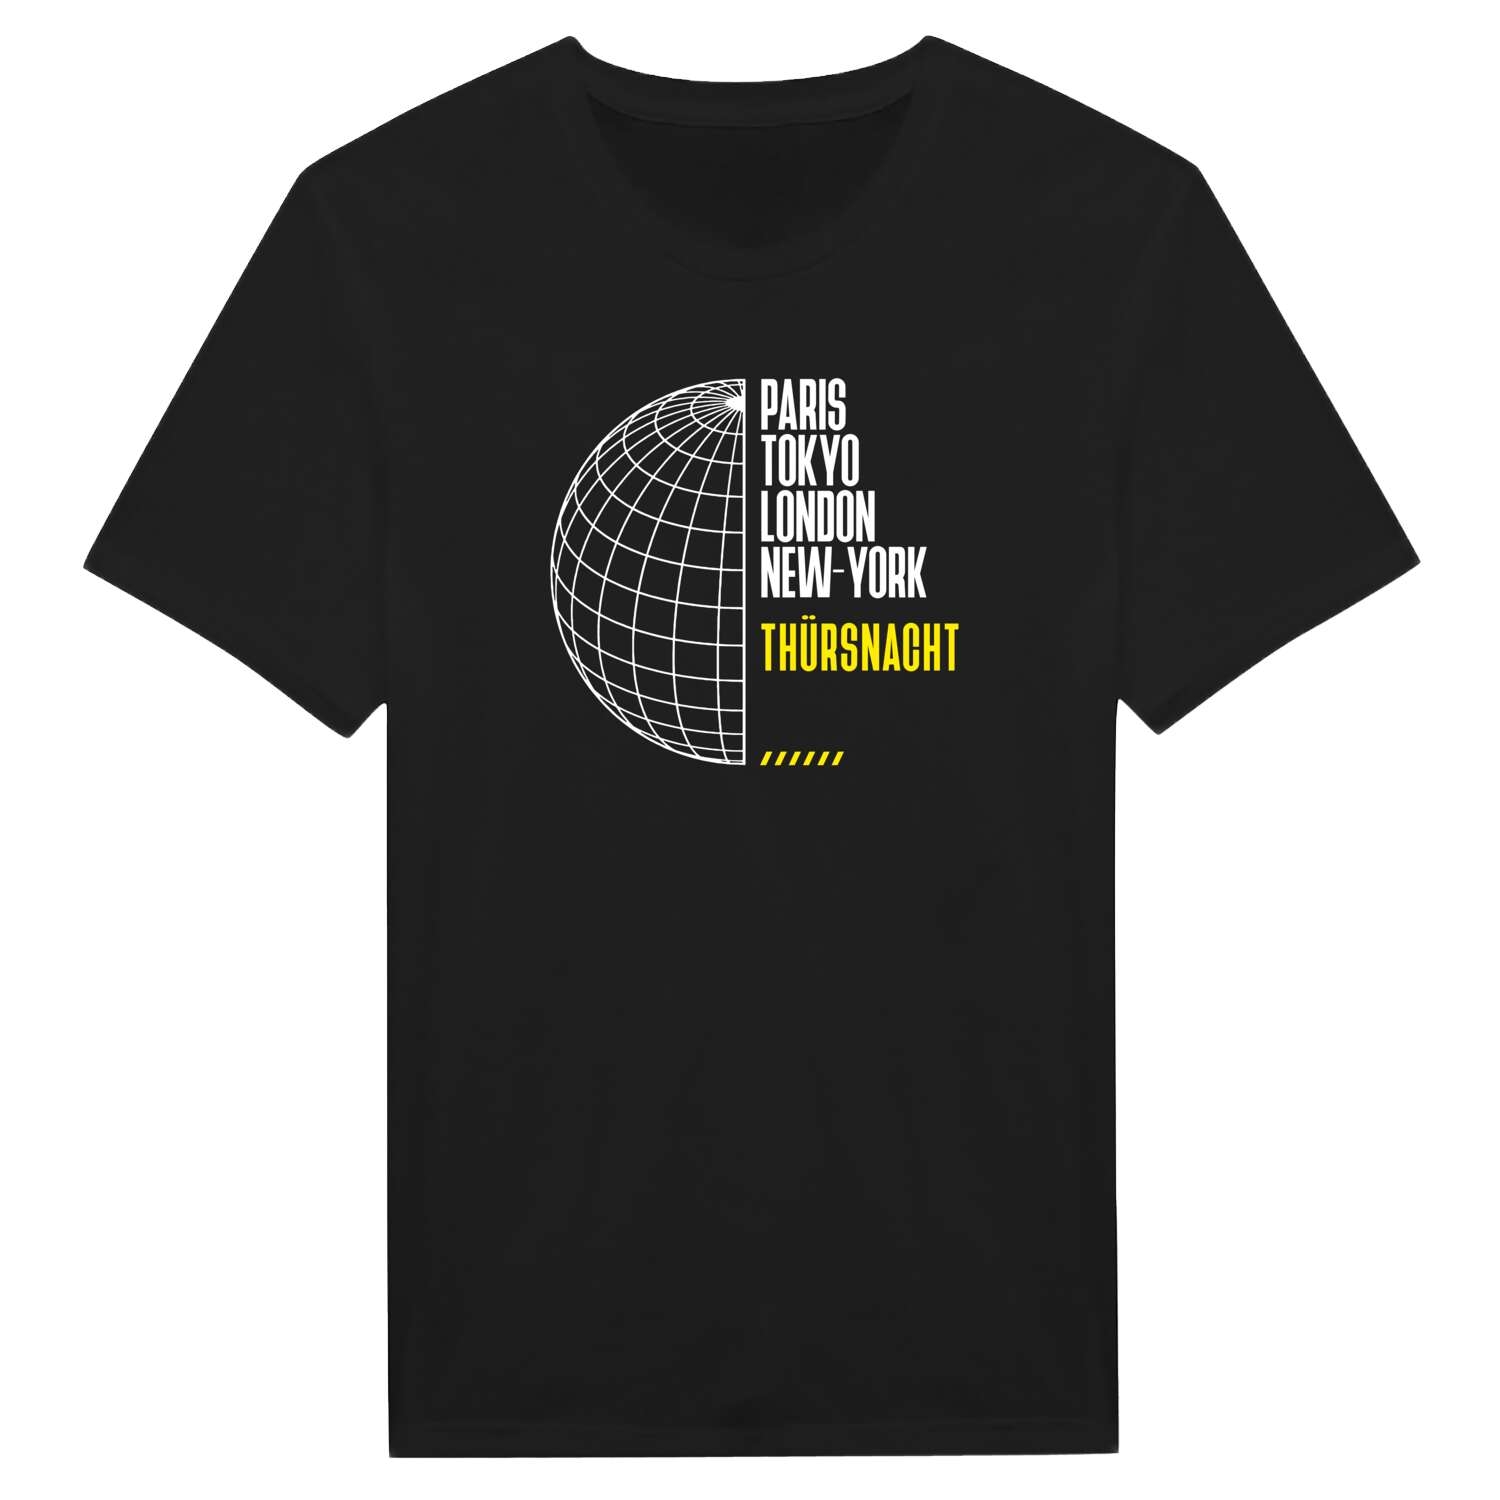 Thürsnacht T-Shirt »Paris Tokyo London«